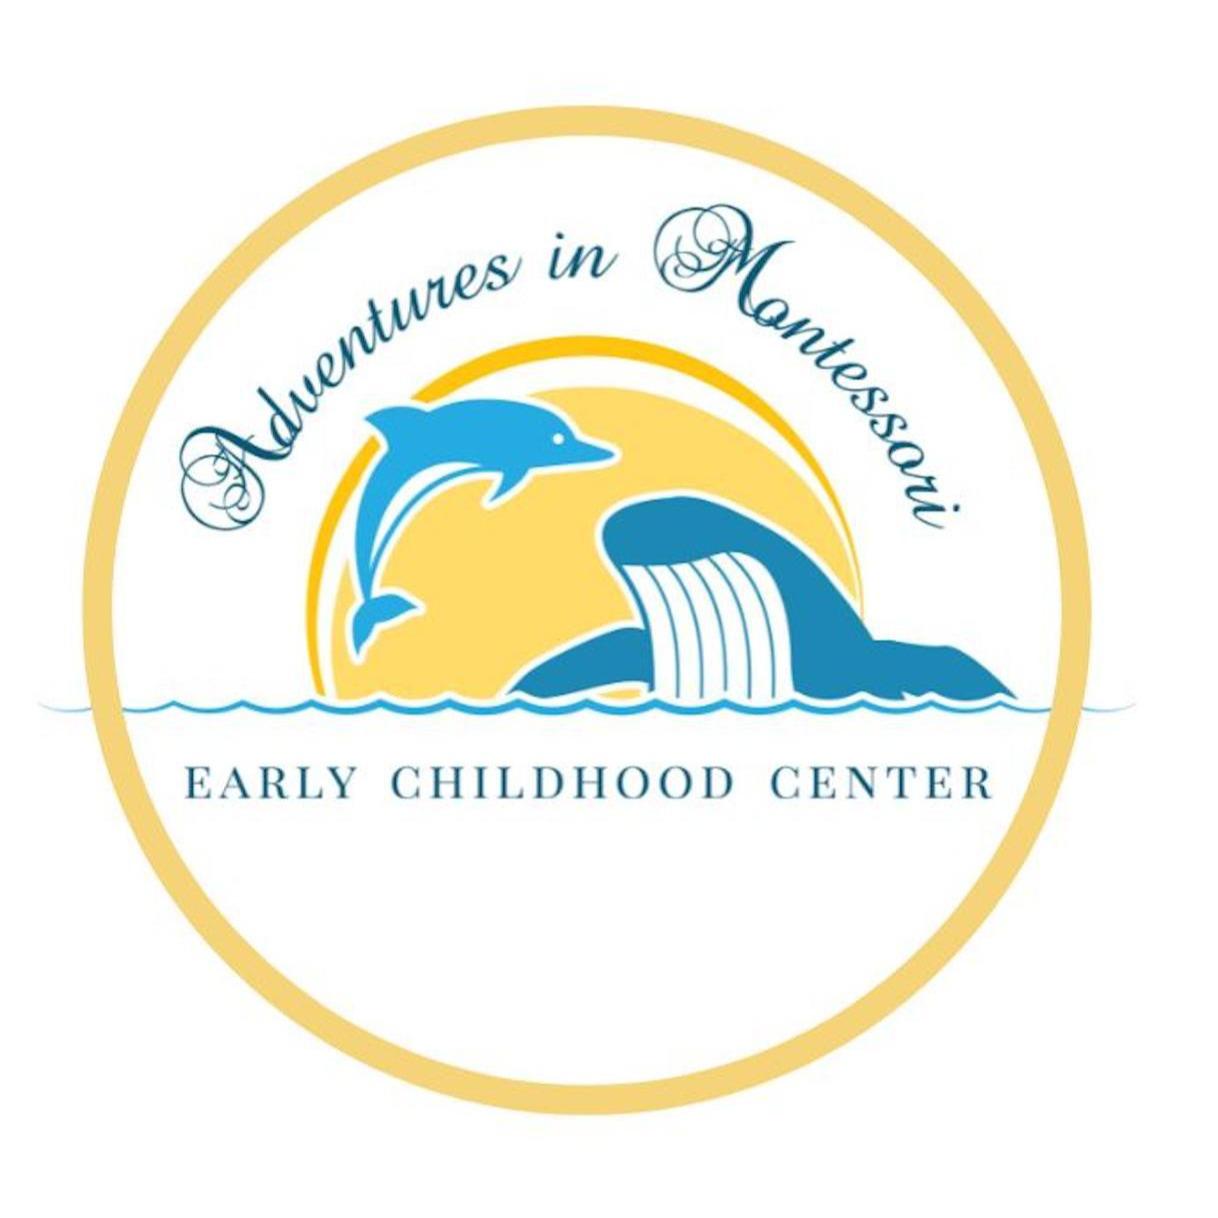 The Montessori Children's House of Arlington